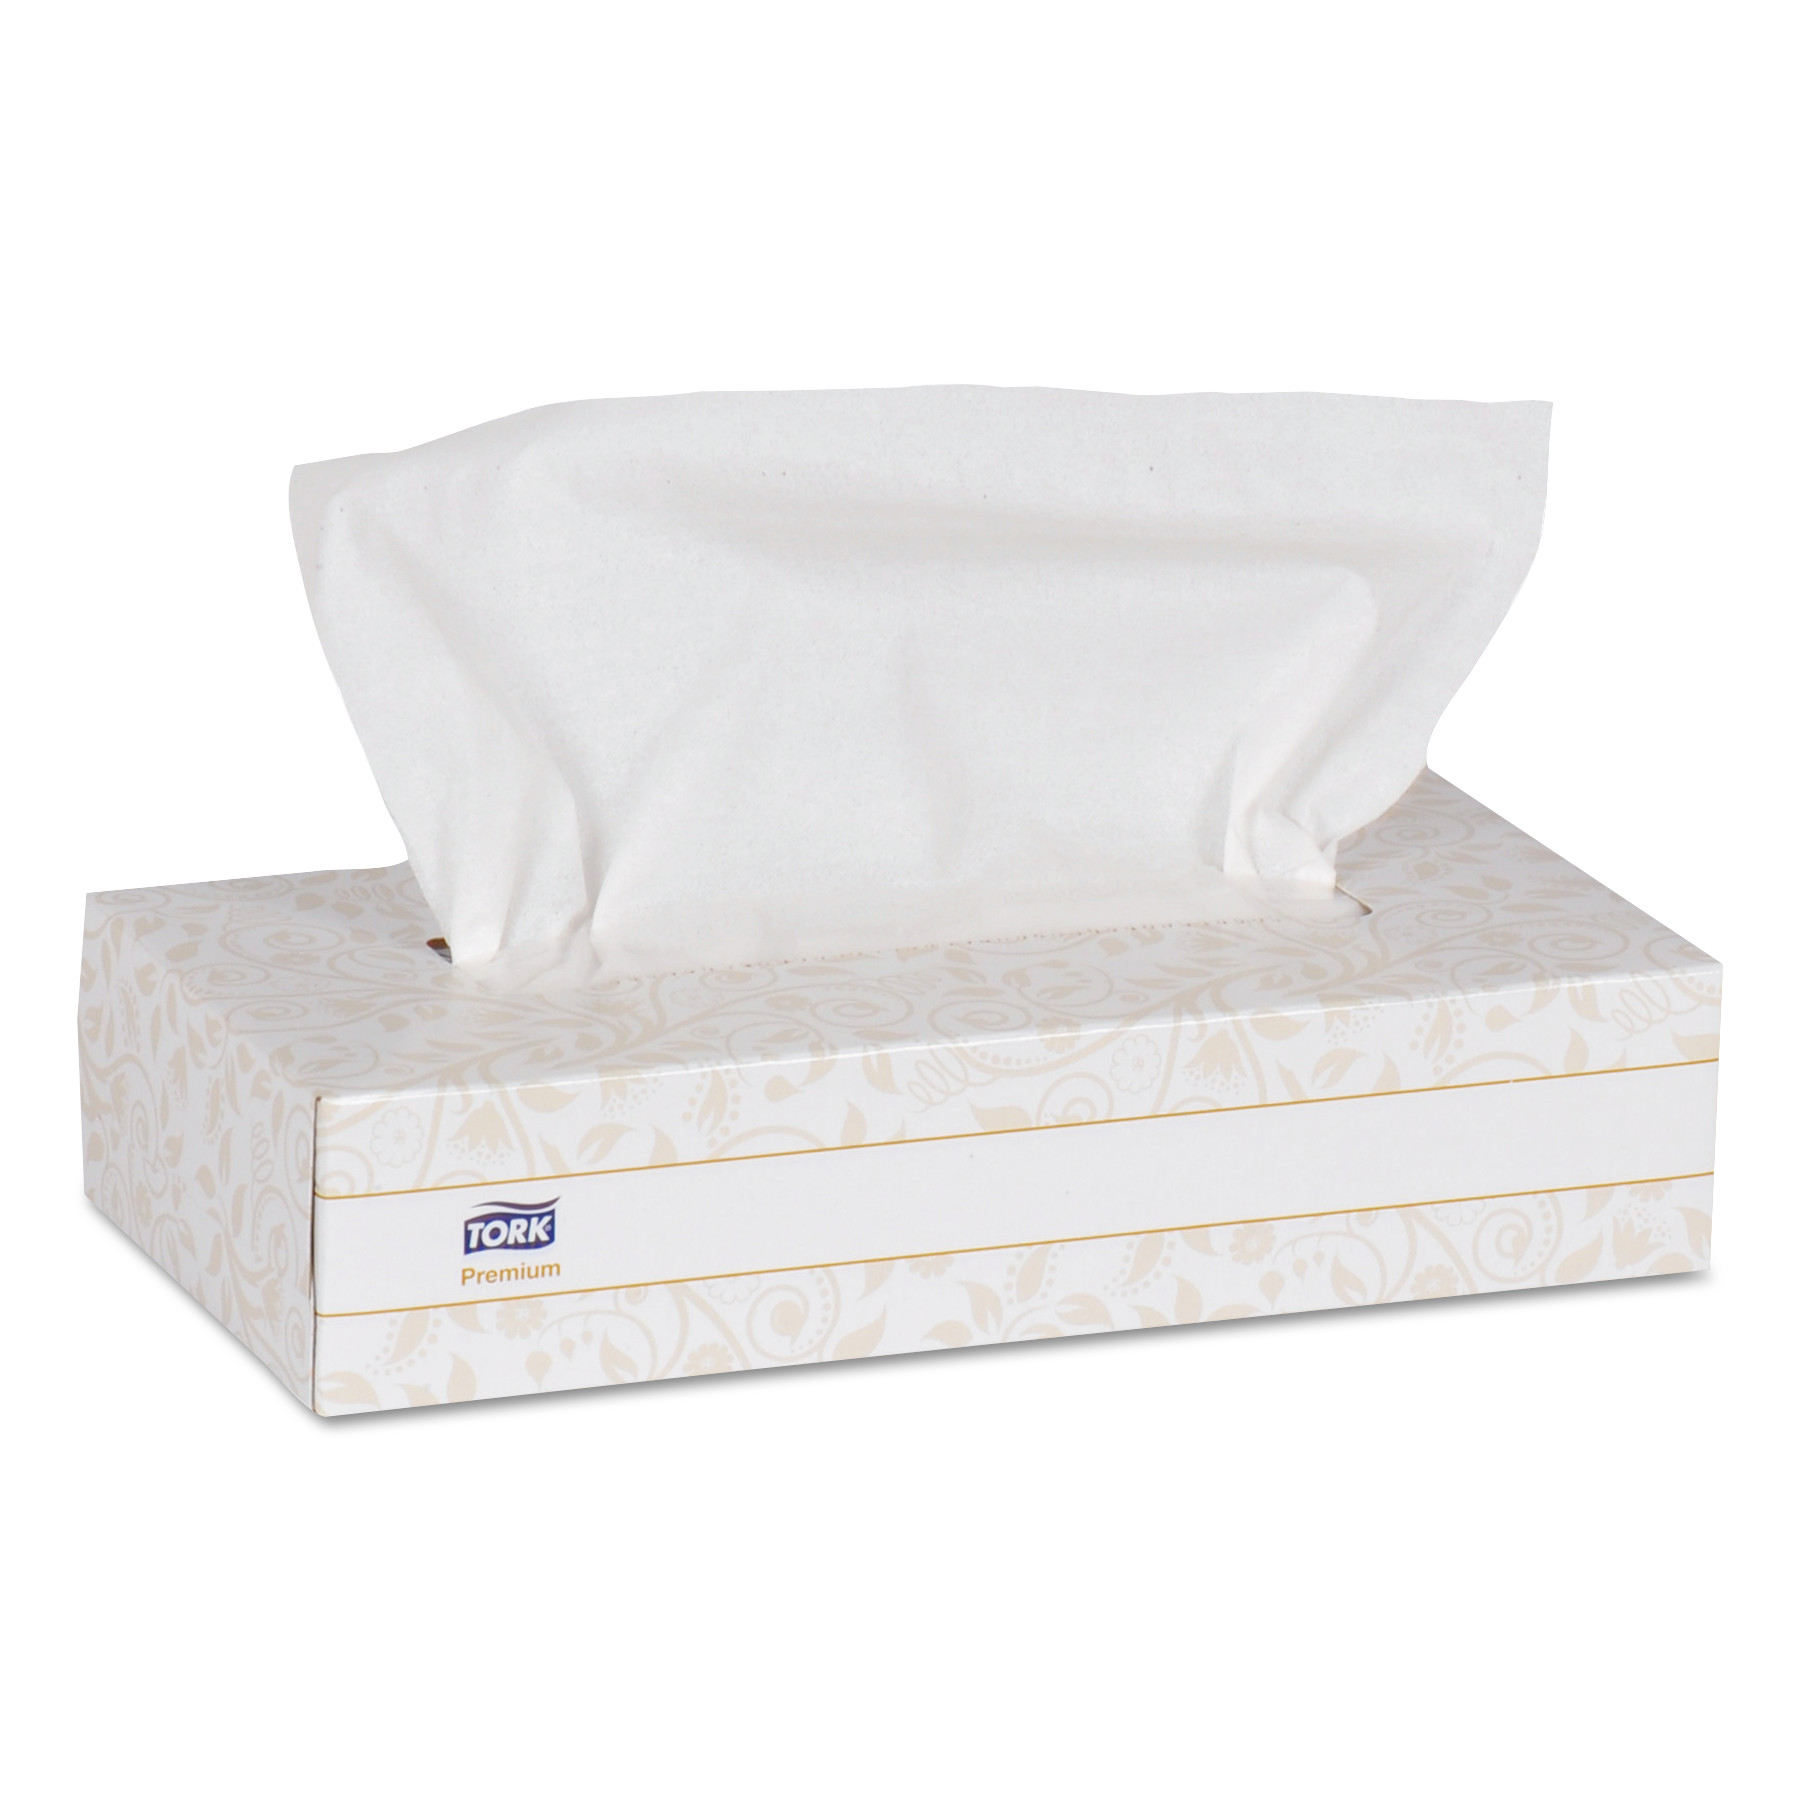 Premium Facial Tissue, 2-Ply, White, 8 x 8, 100 Sheets/Box, 30BX/Carton